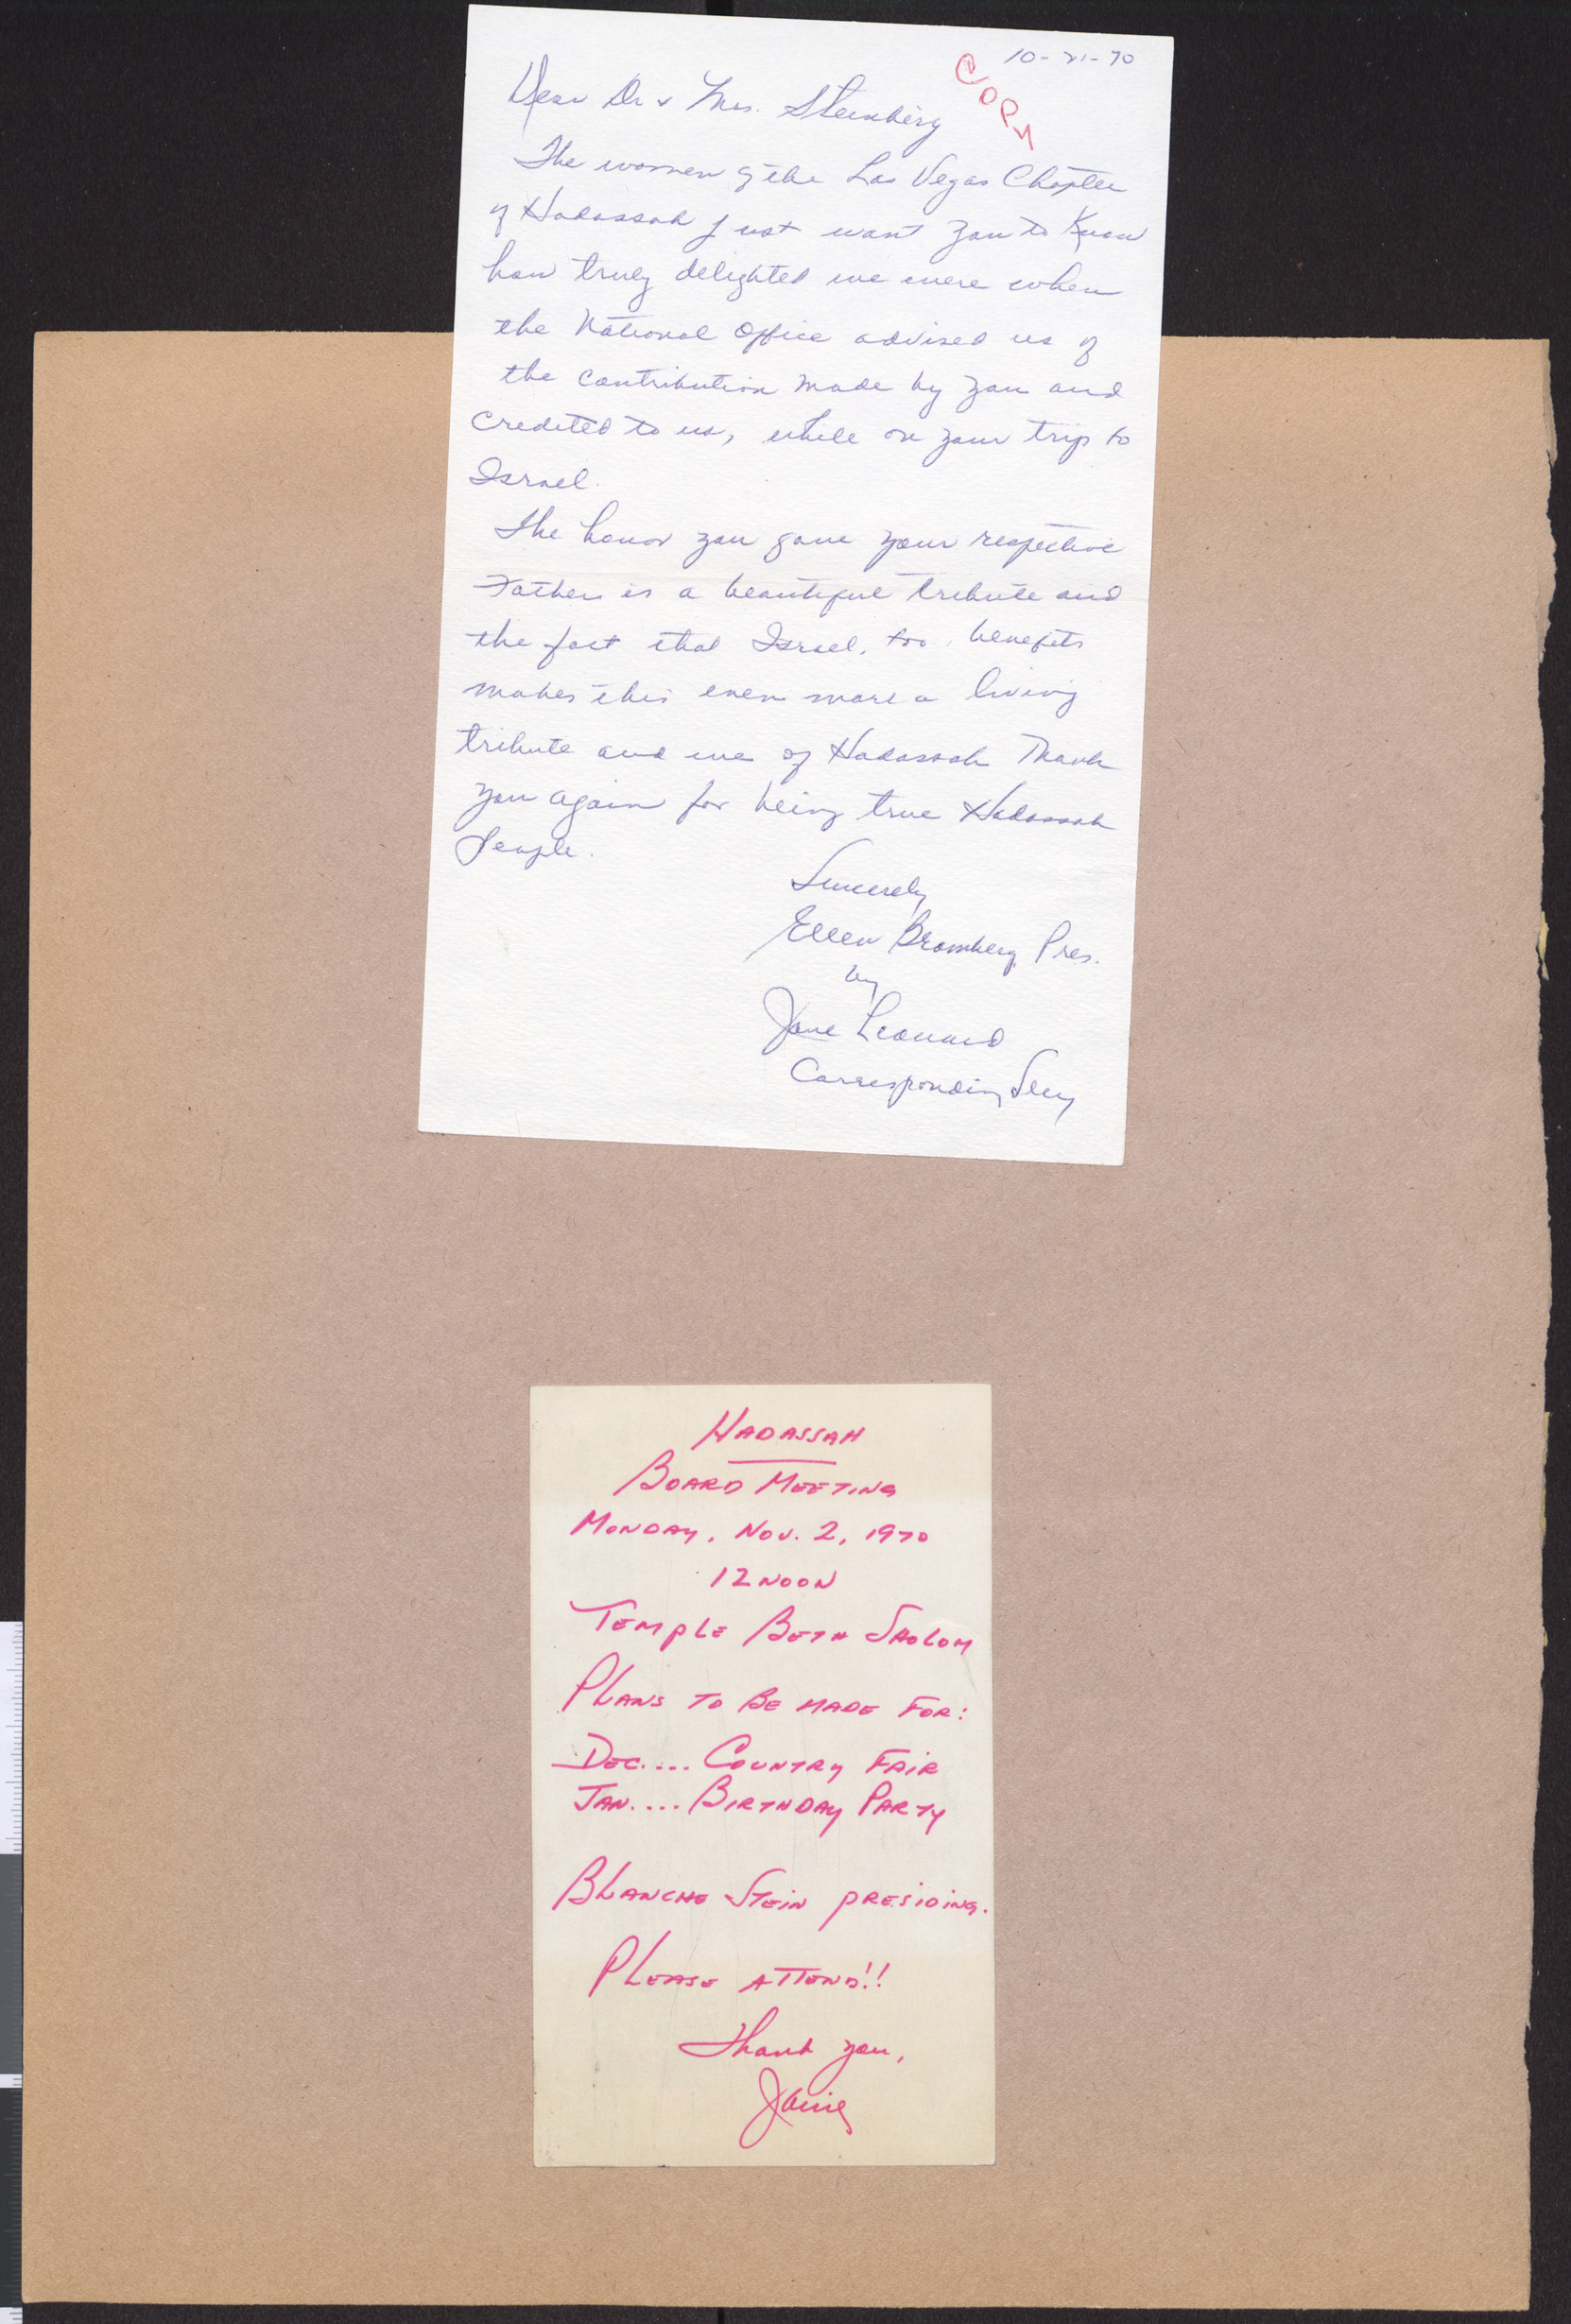 Notecard from Ellen Bromberg and Jane Leonard to Dr. & Mrs. Steinberg, October 21, 1970